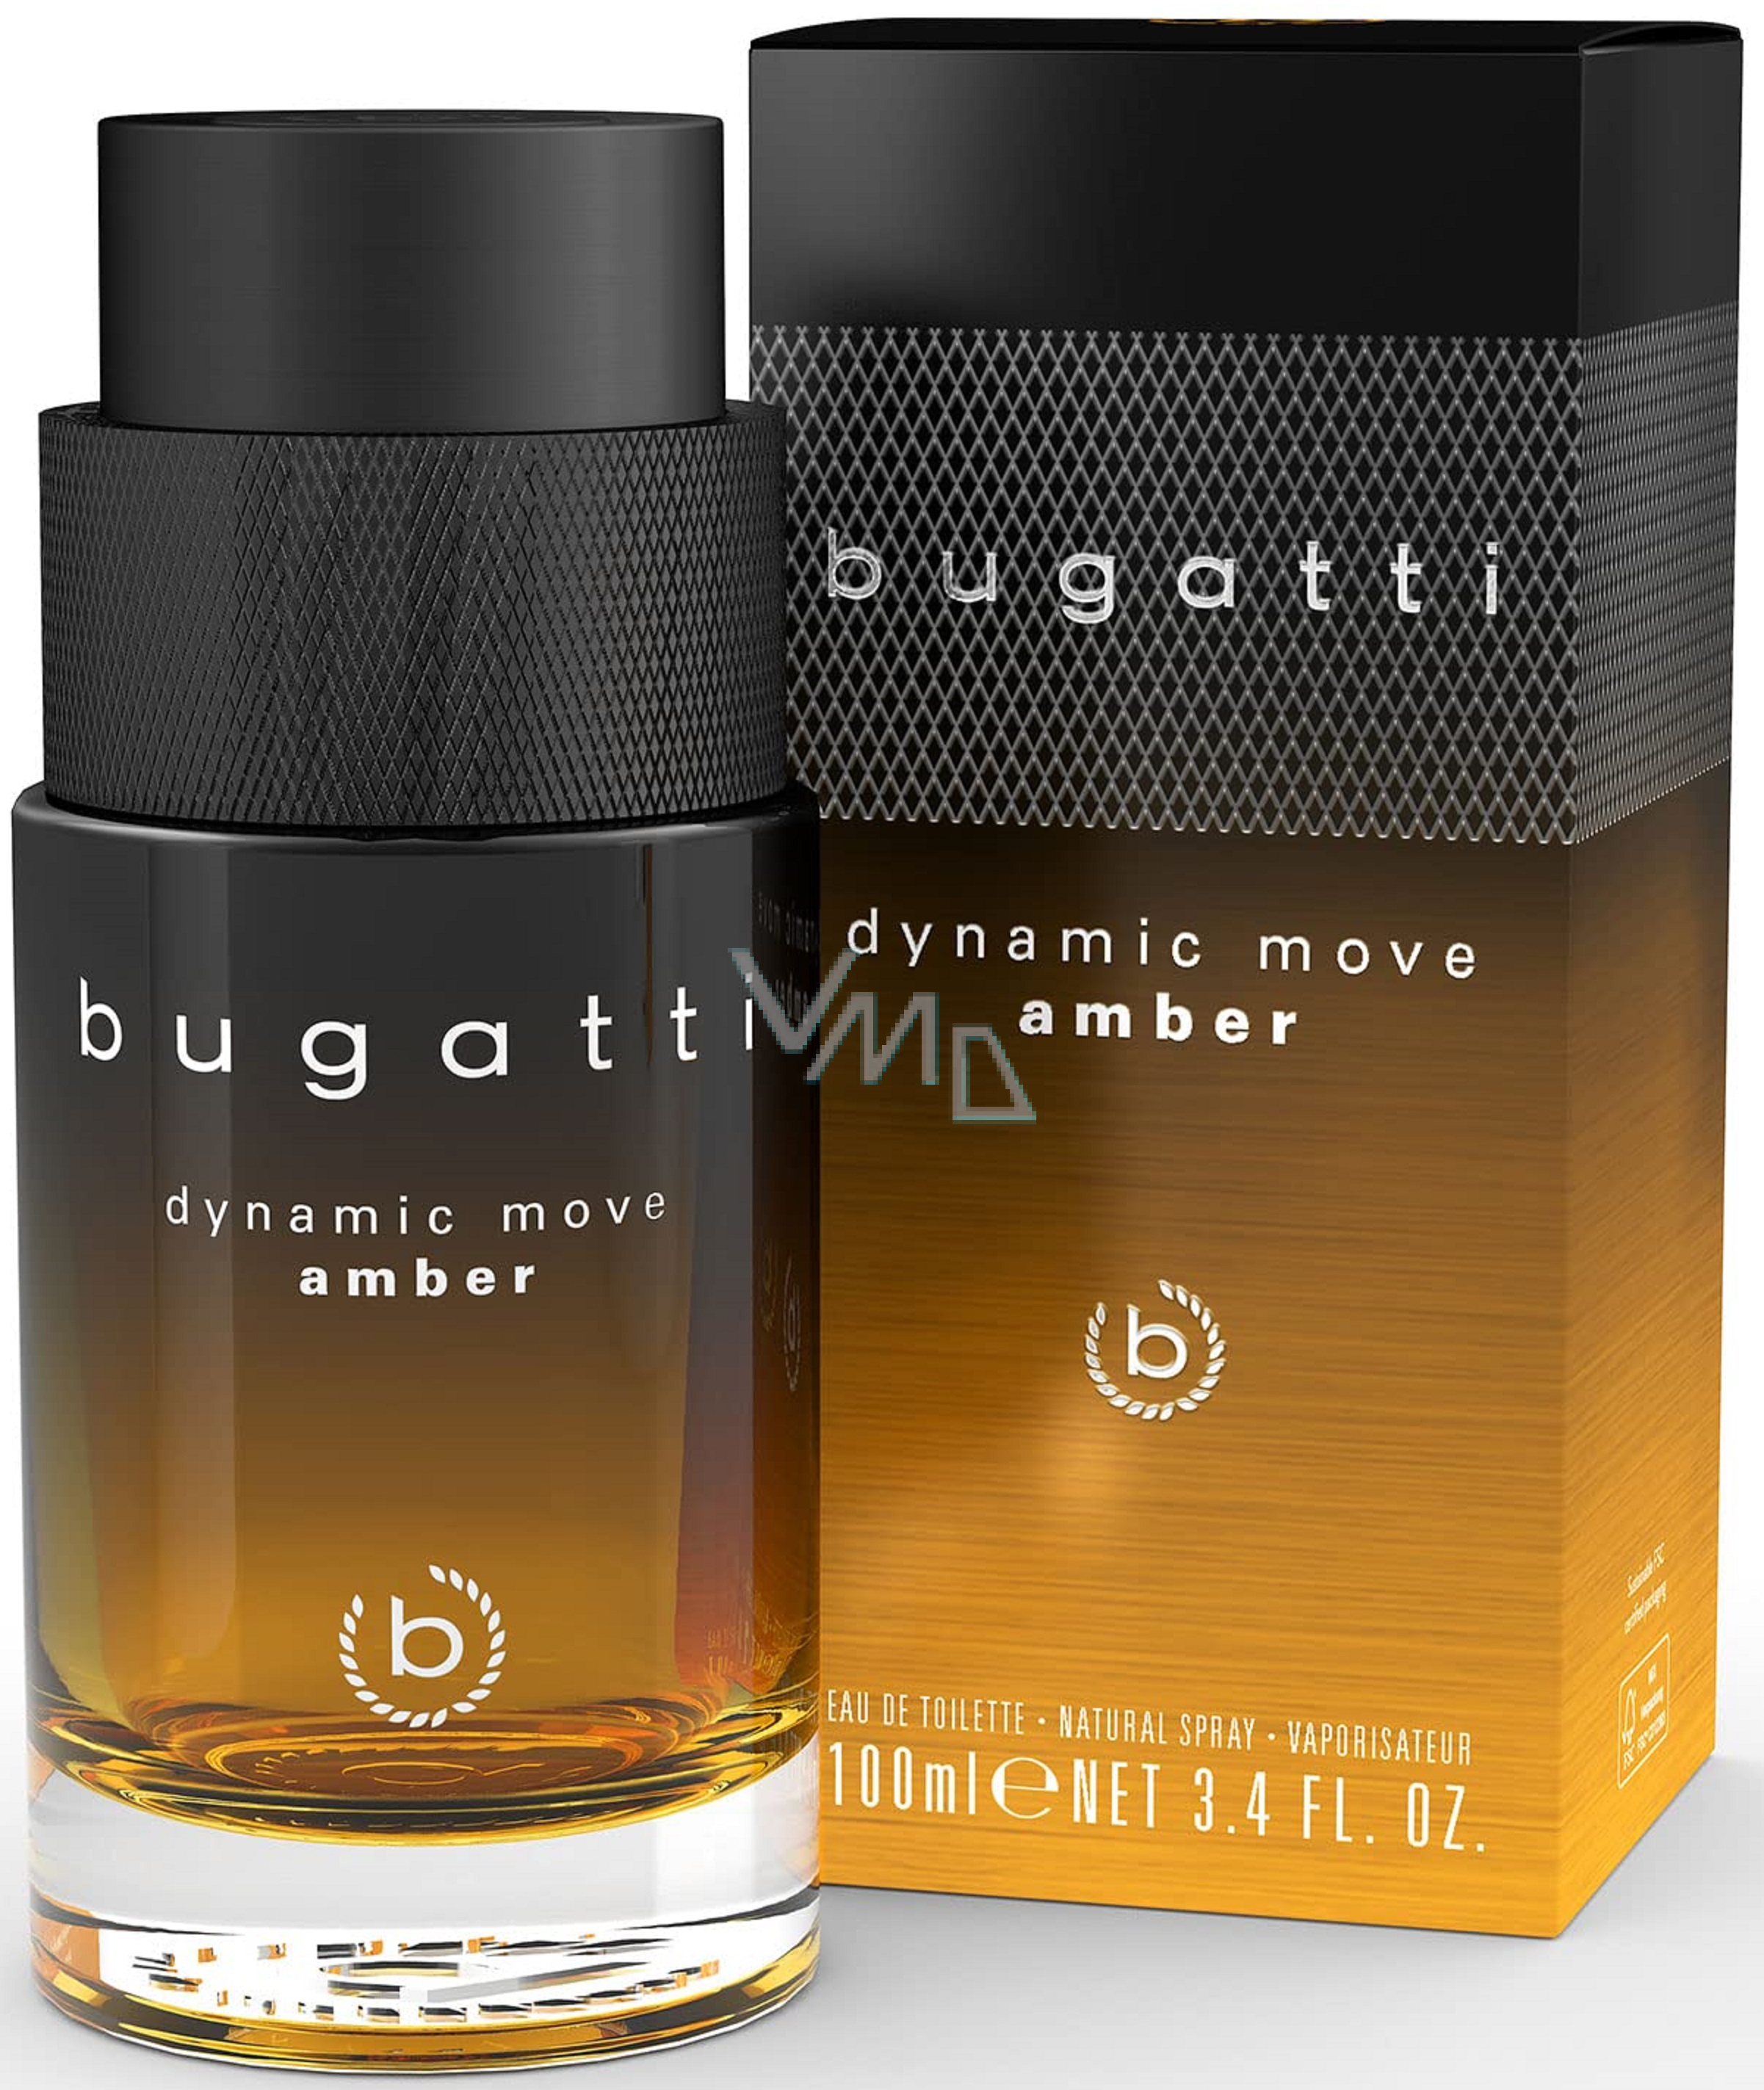 Bugatti Dynamic Move Amber Eau drogerie 100 ml Toilette - - parfumerie VMD de men for